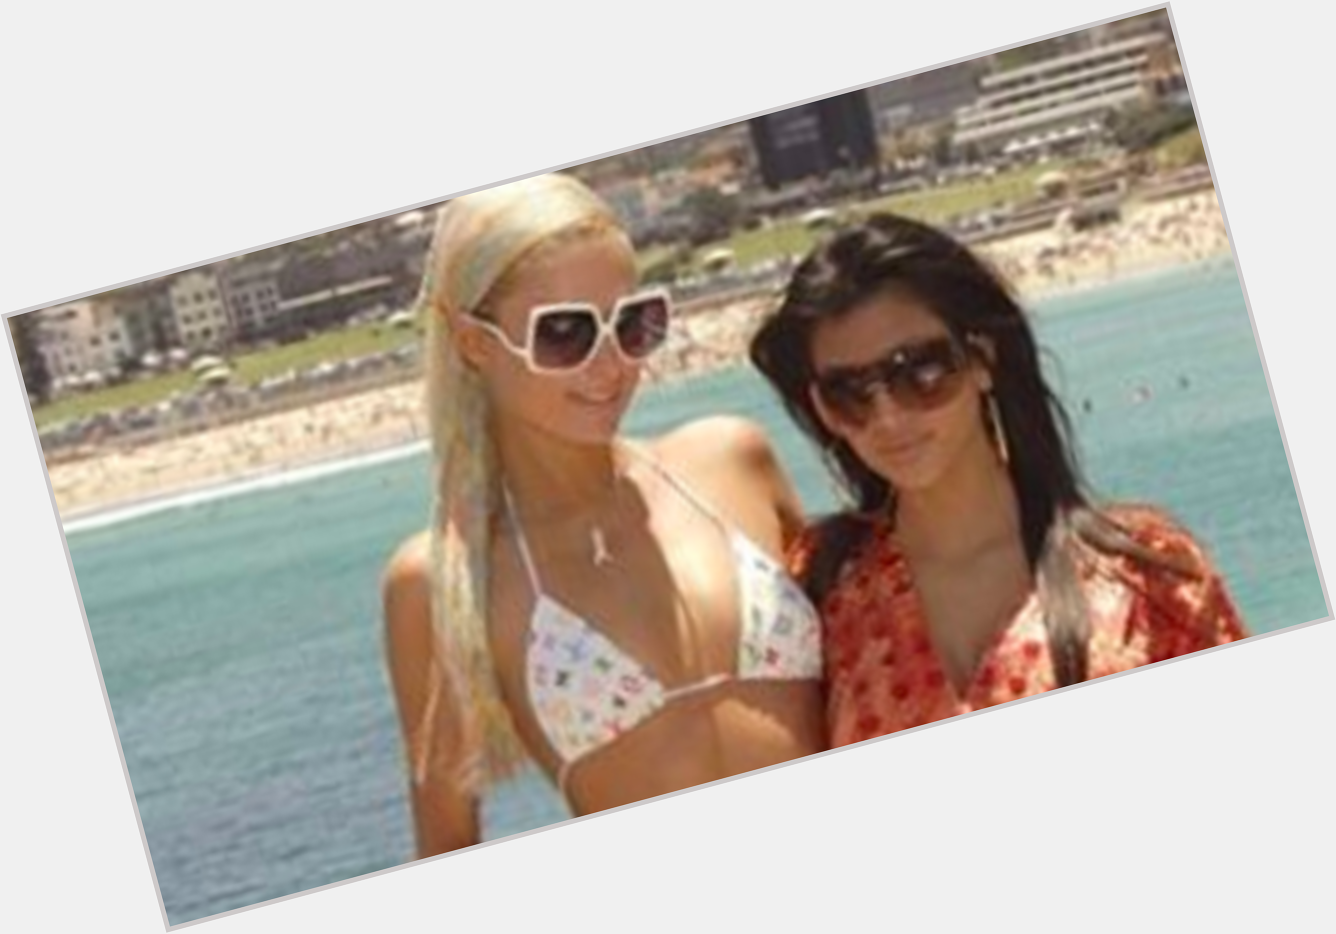 Paris Hilton wishes Kim Kardashian a happy birthday with bikini throwback pic  